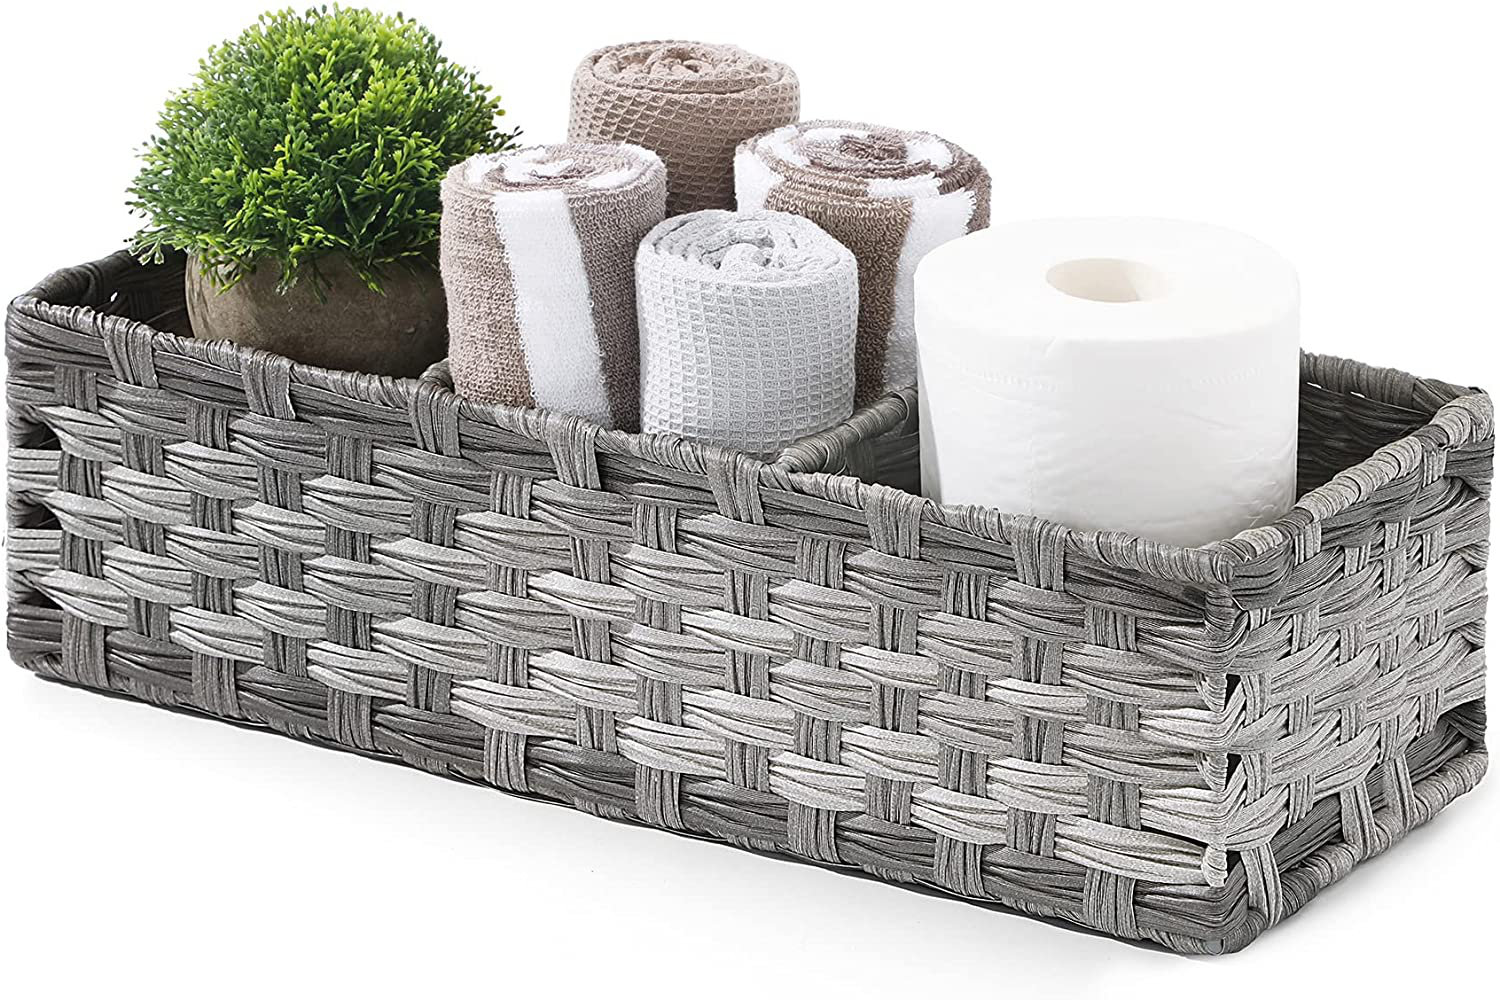 Toilet Paper Basket Natural Woven Bathroom Storage Organizer Basket Wicker  Decorative Toilet Roll Holder Tank Basket(Water Hyacinth)